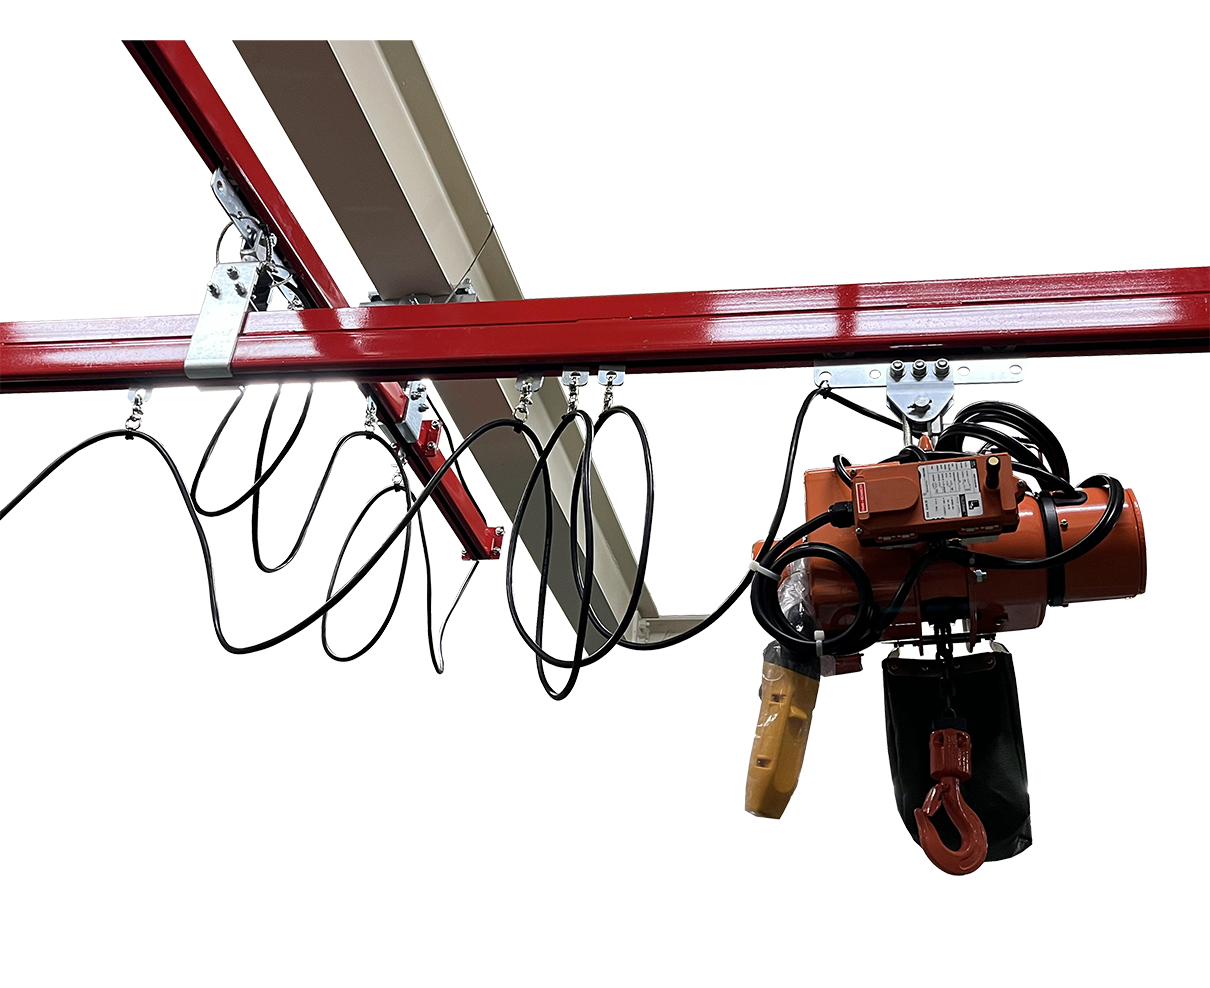 Cầu trục - Overhead crane